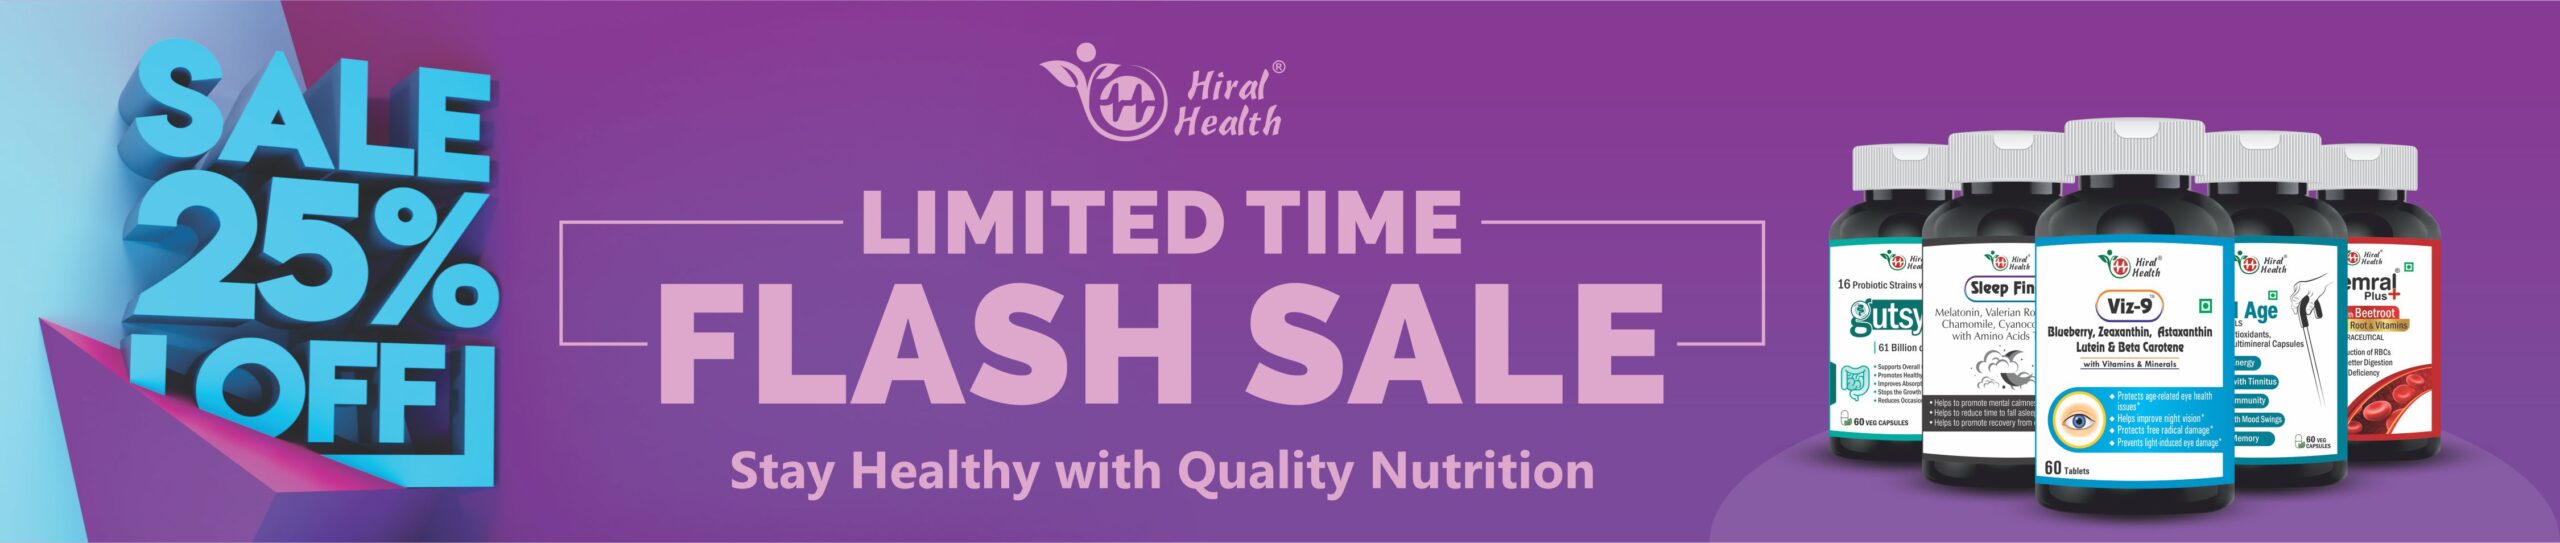 Hiral Health flash sale on nutrition